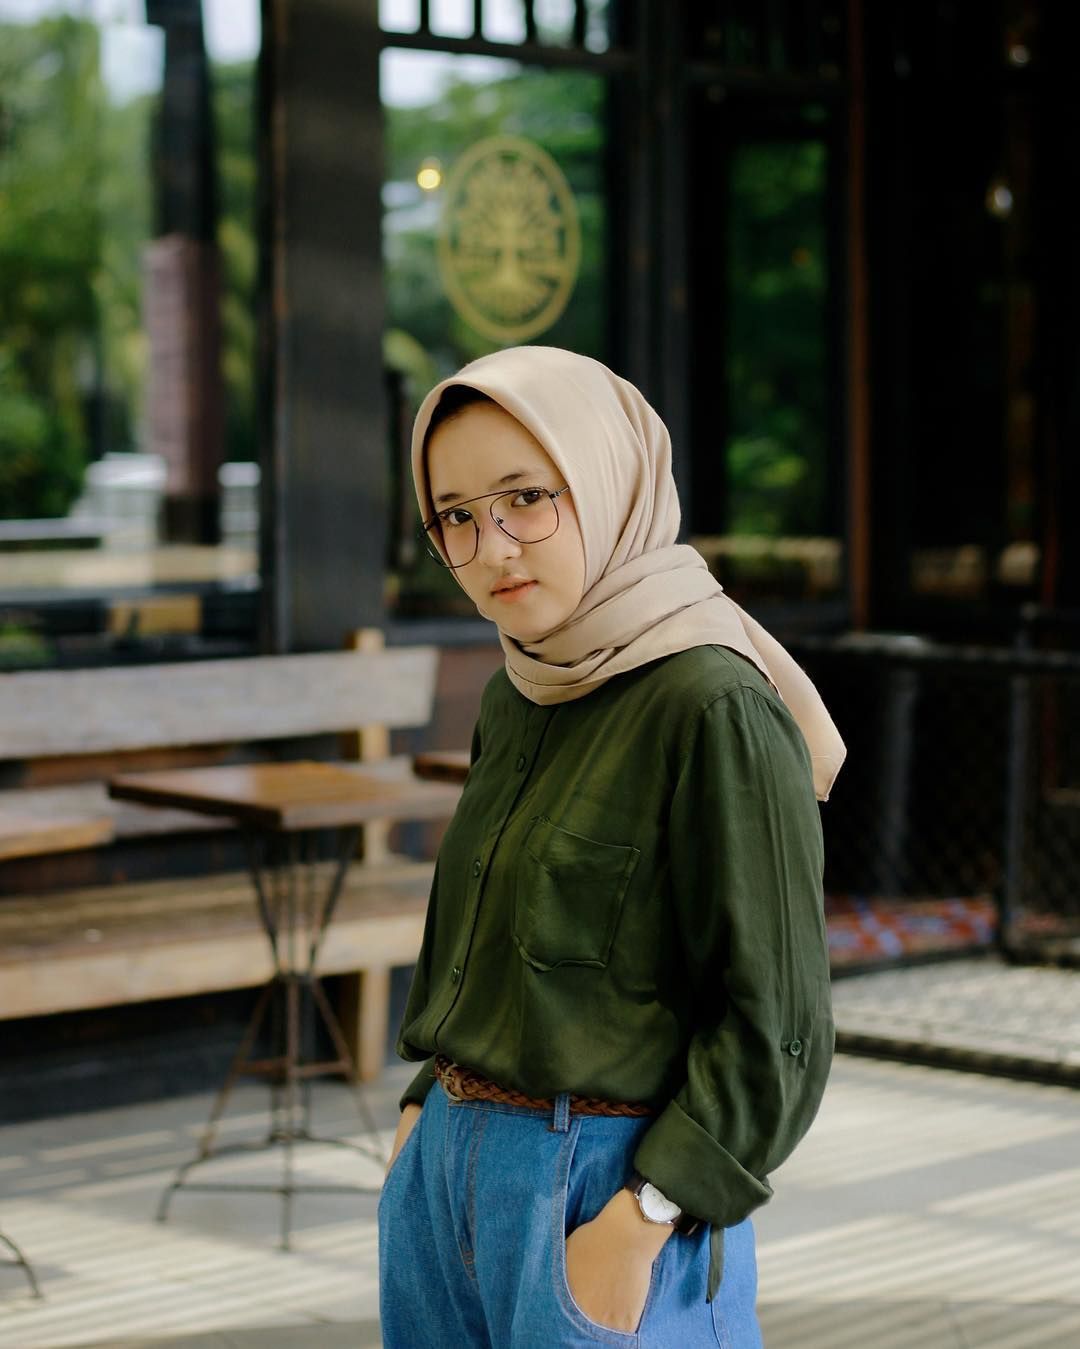  Warna  Jilbab  Yang Cocok Untuk Baju Warna  Hijau Army 